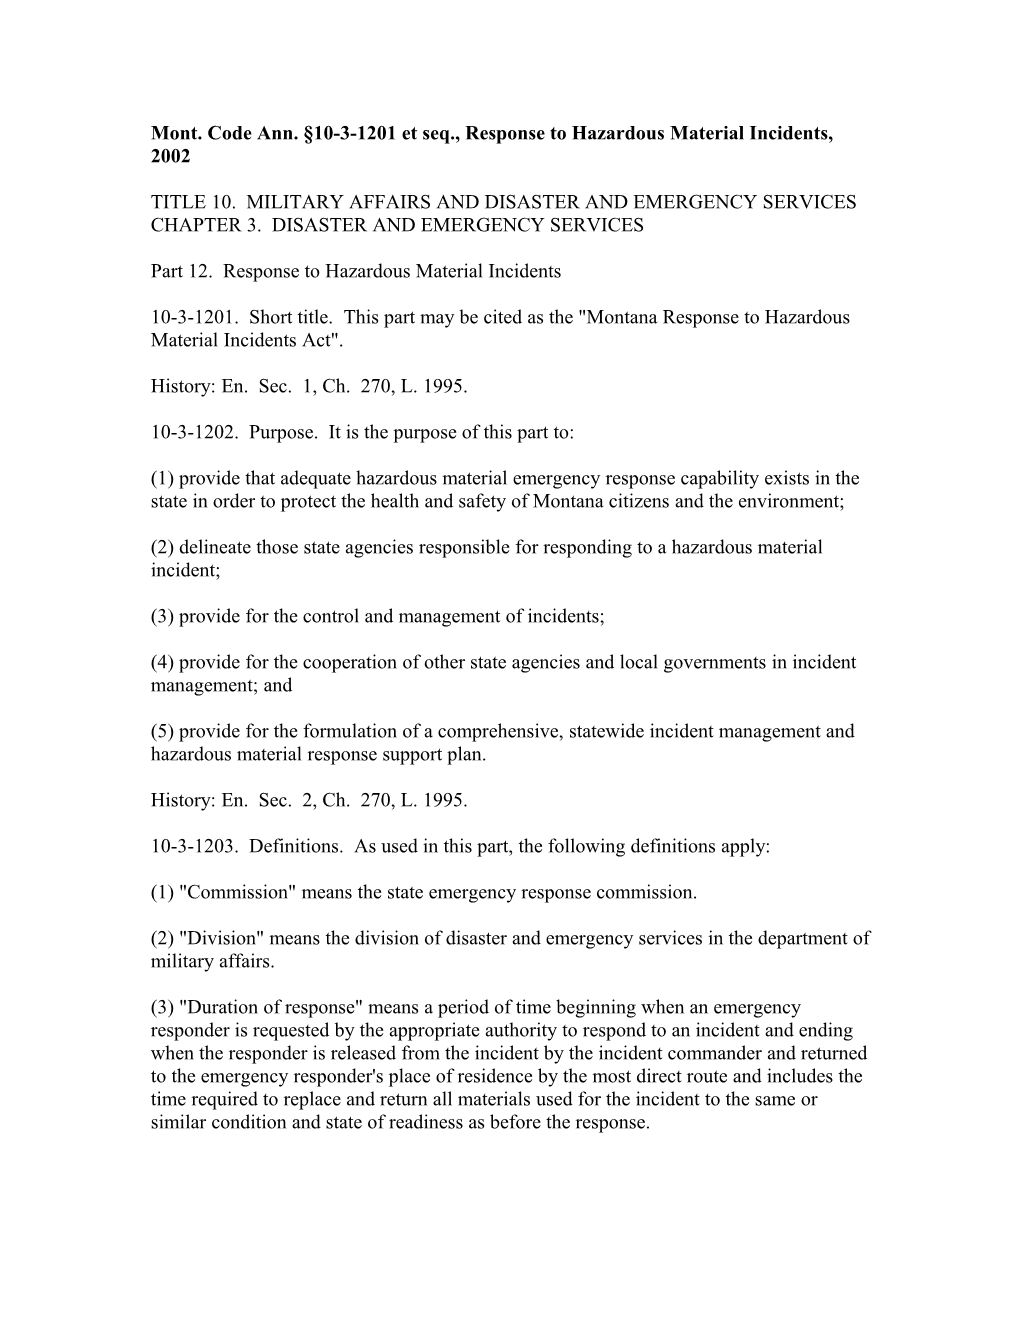 Mont. Code Ann. 10-3-1201 Et Seq., Response to Hazardous Material Incidents, 2002